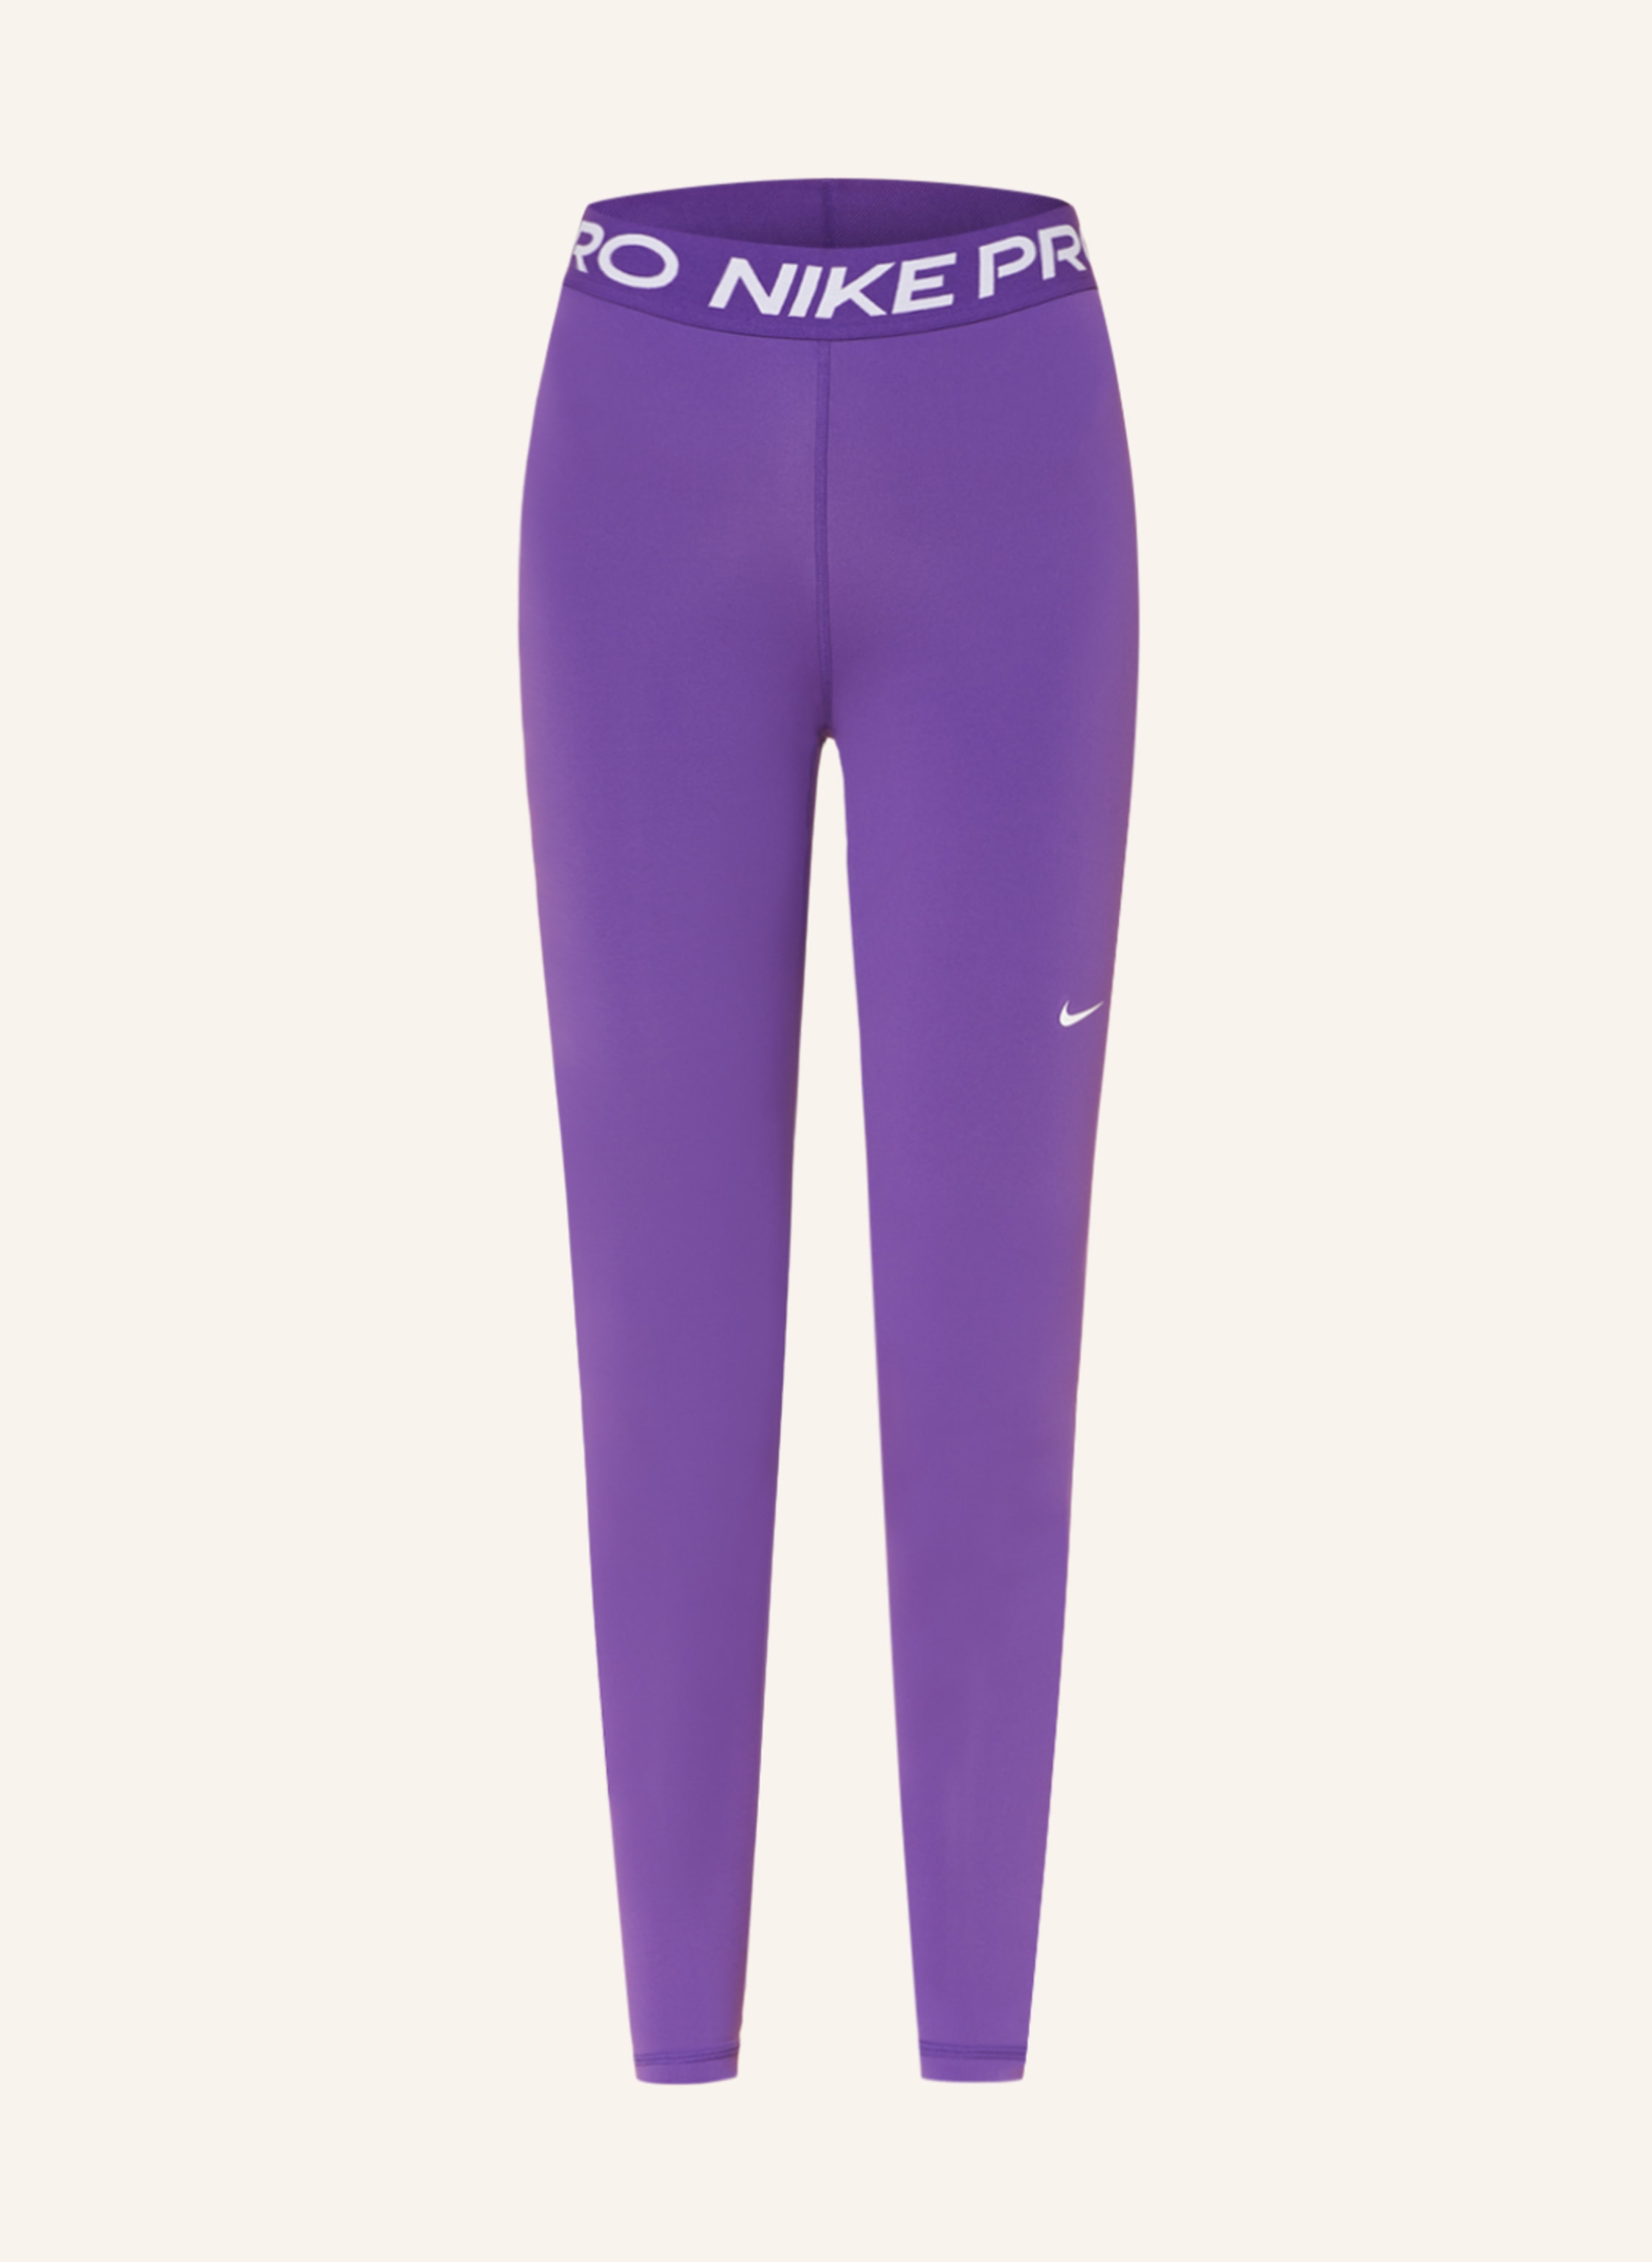 Nike Pro Elite Purple Half Tights Track & Field USA Sample Size Small  825017-XXX